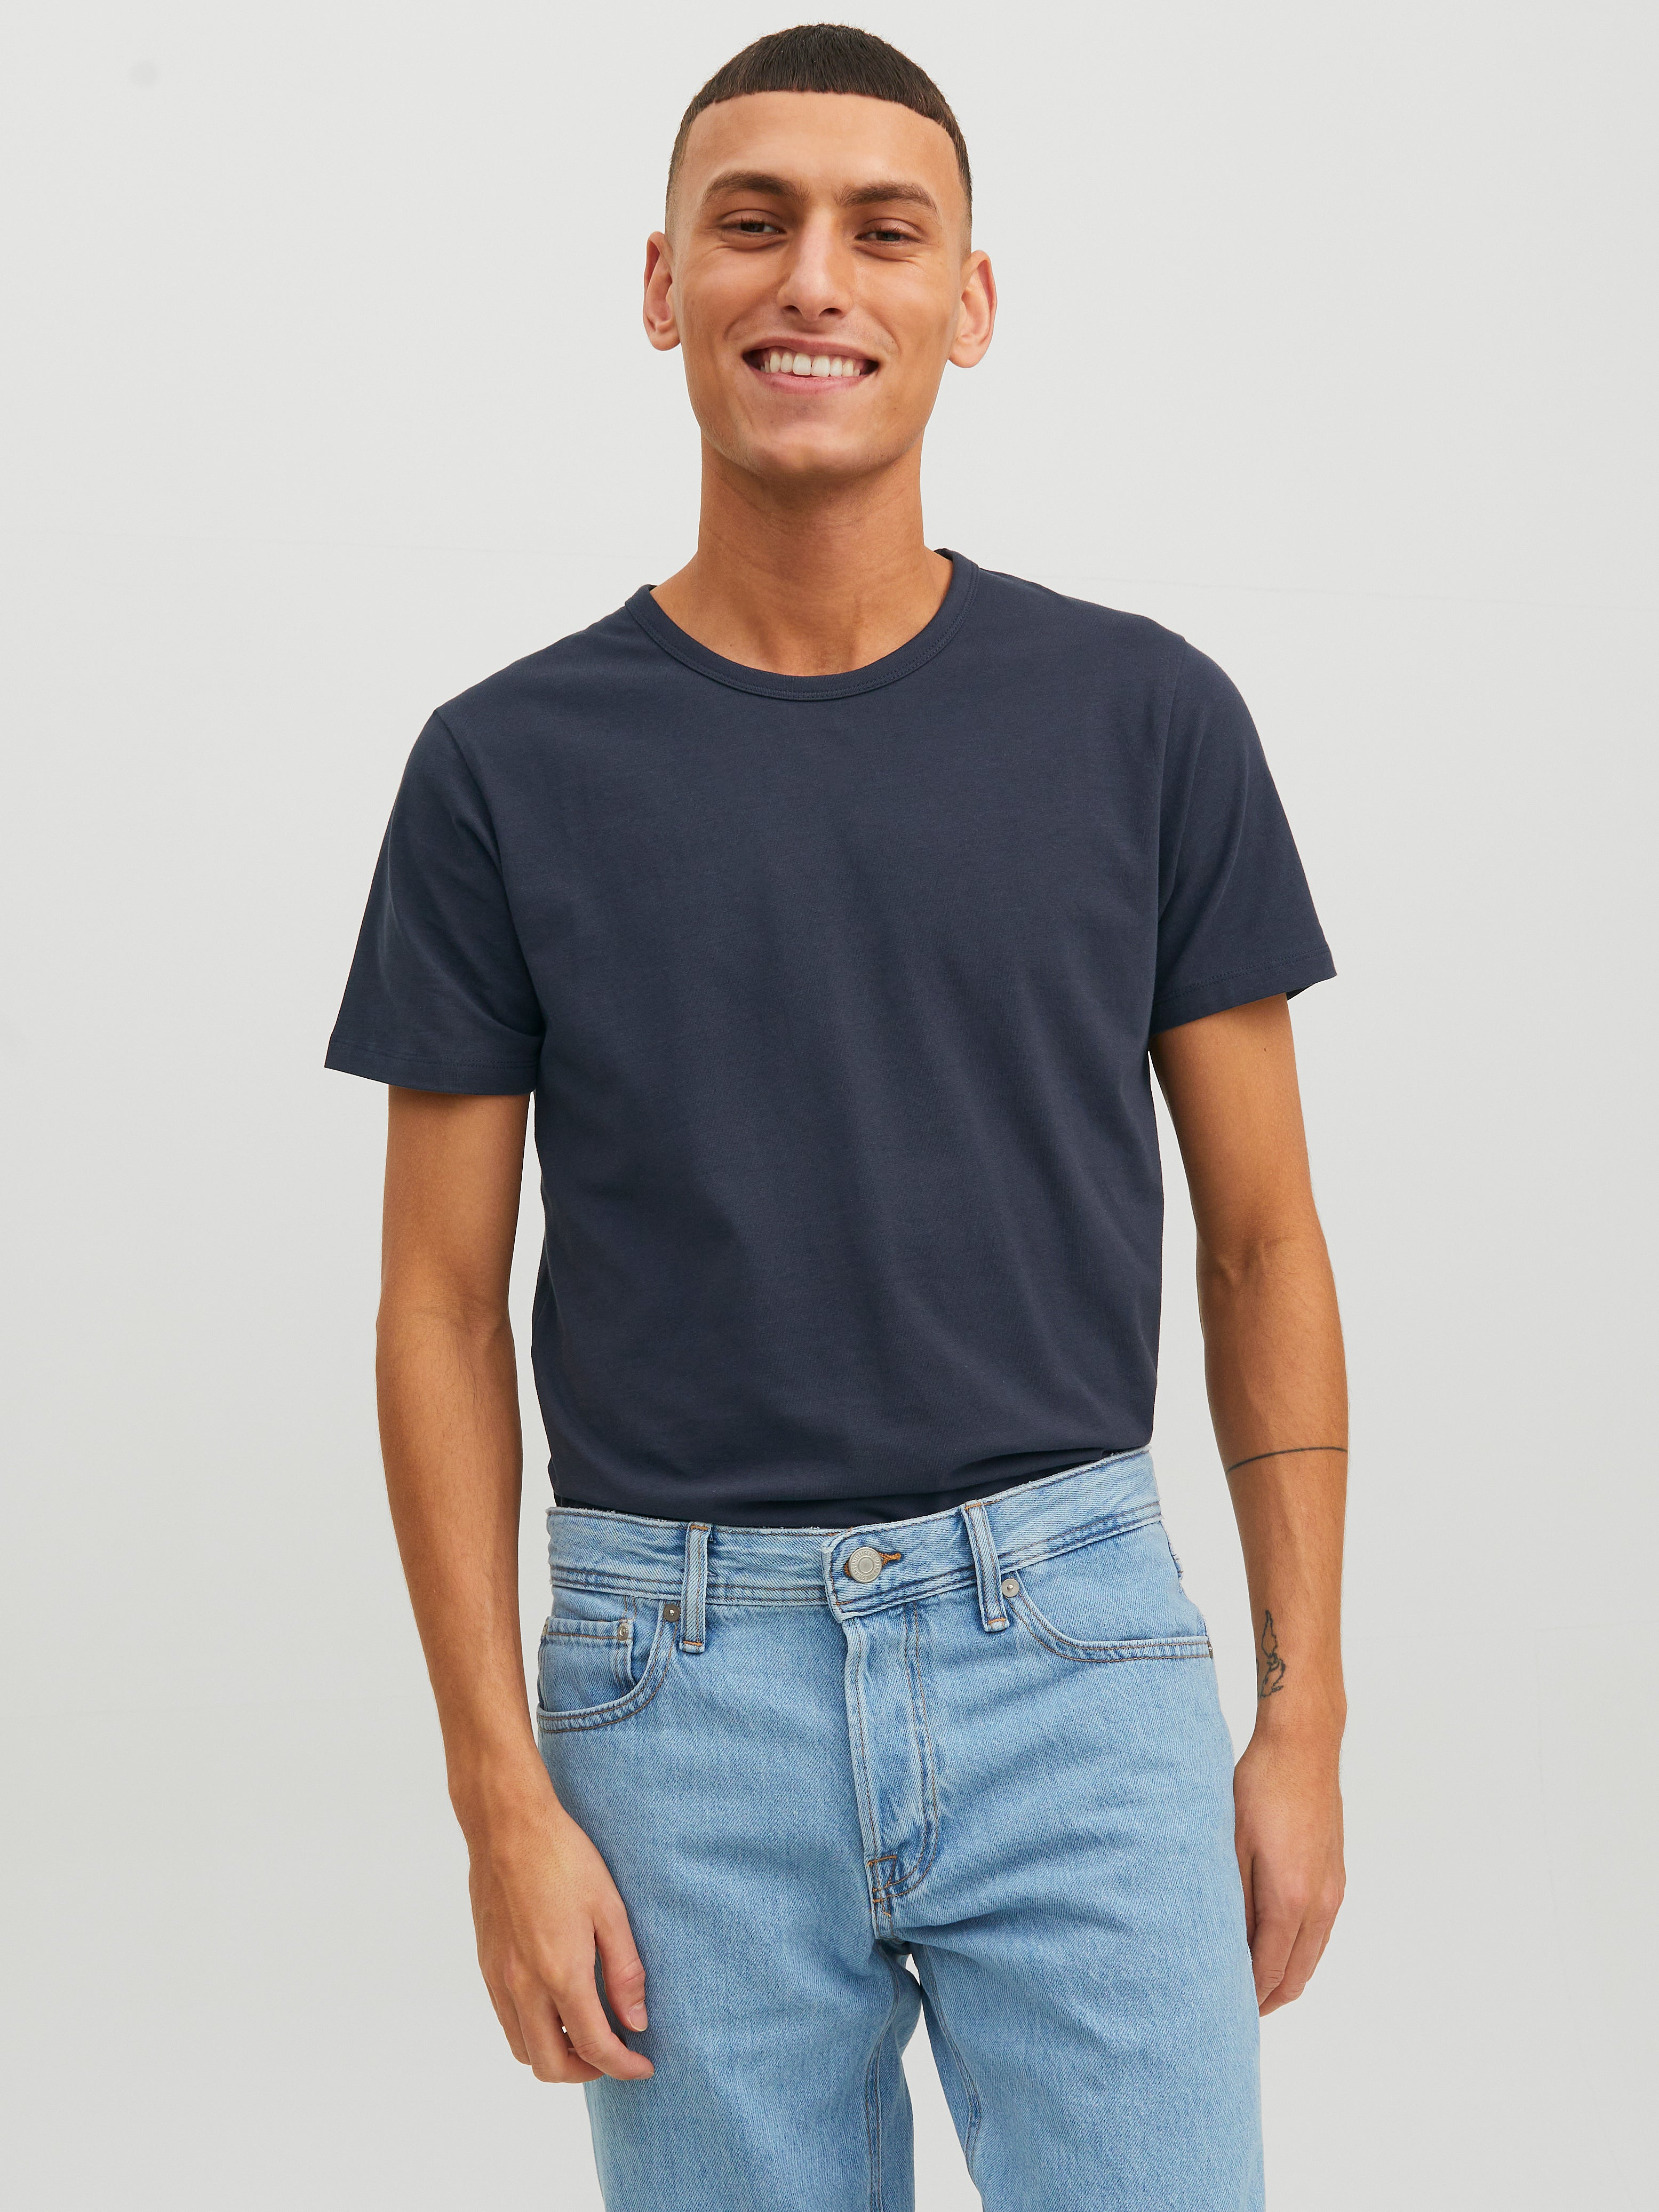 MODA BAMBINI Camicie & T-shirt Jeans Jack & Jones Camicia sconto 57% Blu 152 